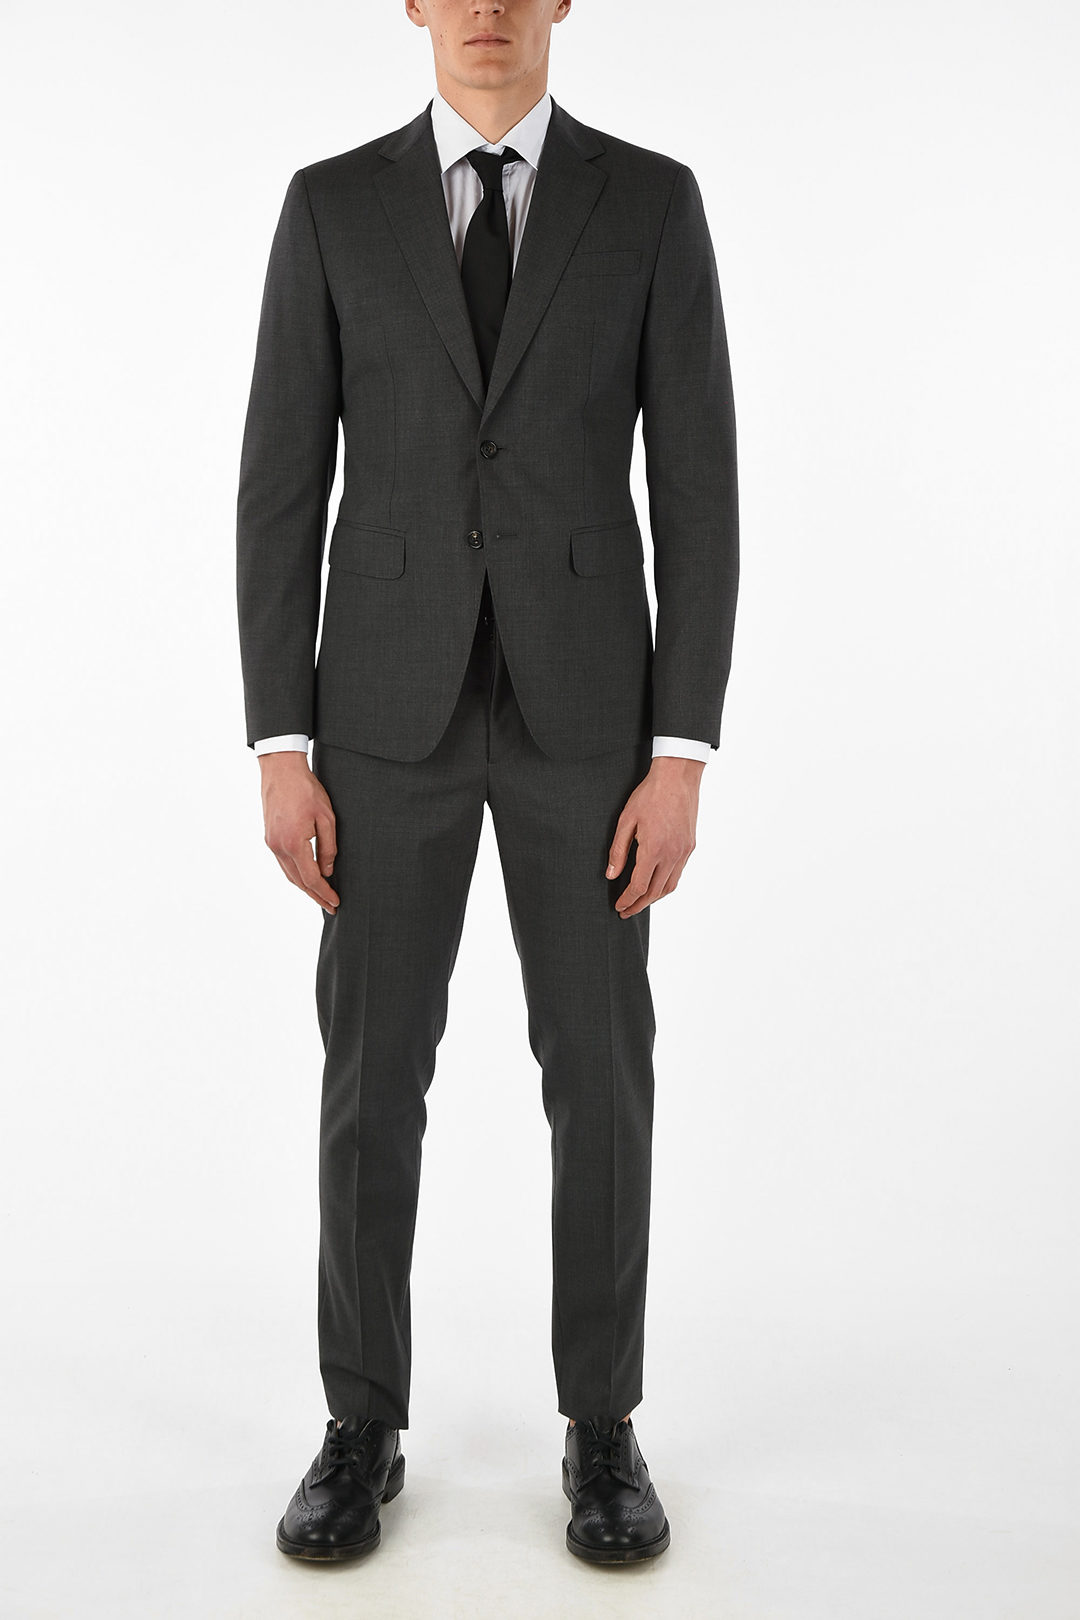 virgin-wool-blend-side-vents-suit-2-button-manchester-suit_677786_zoom.jpg